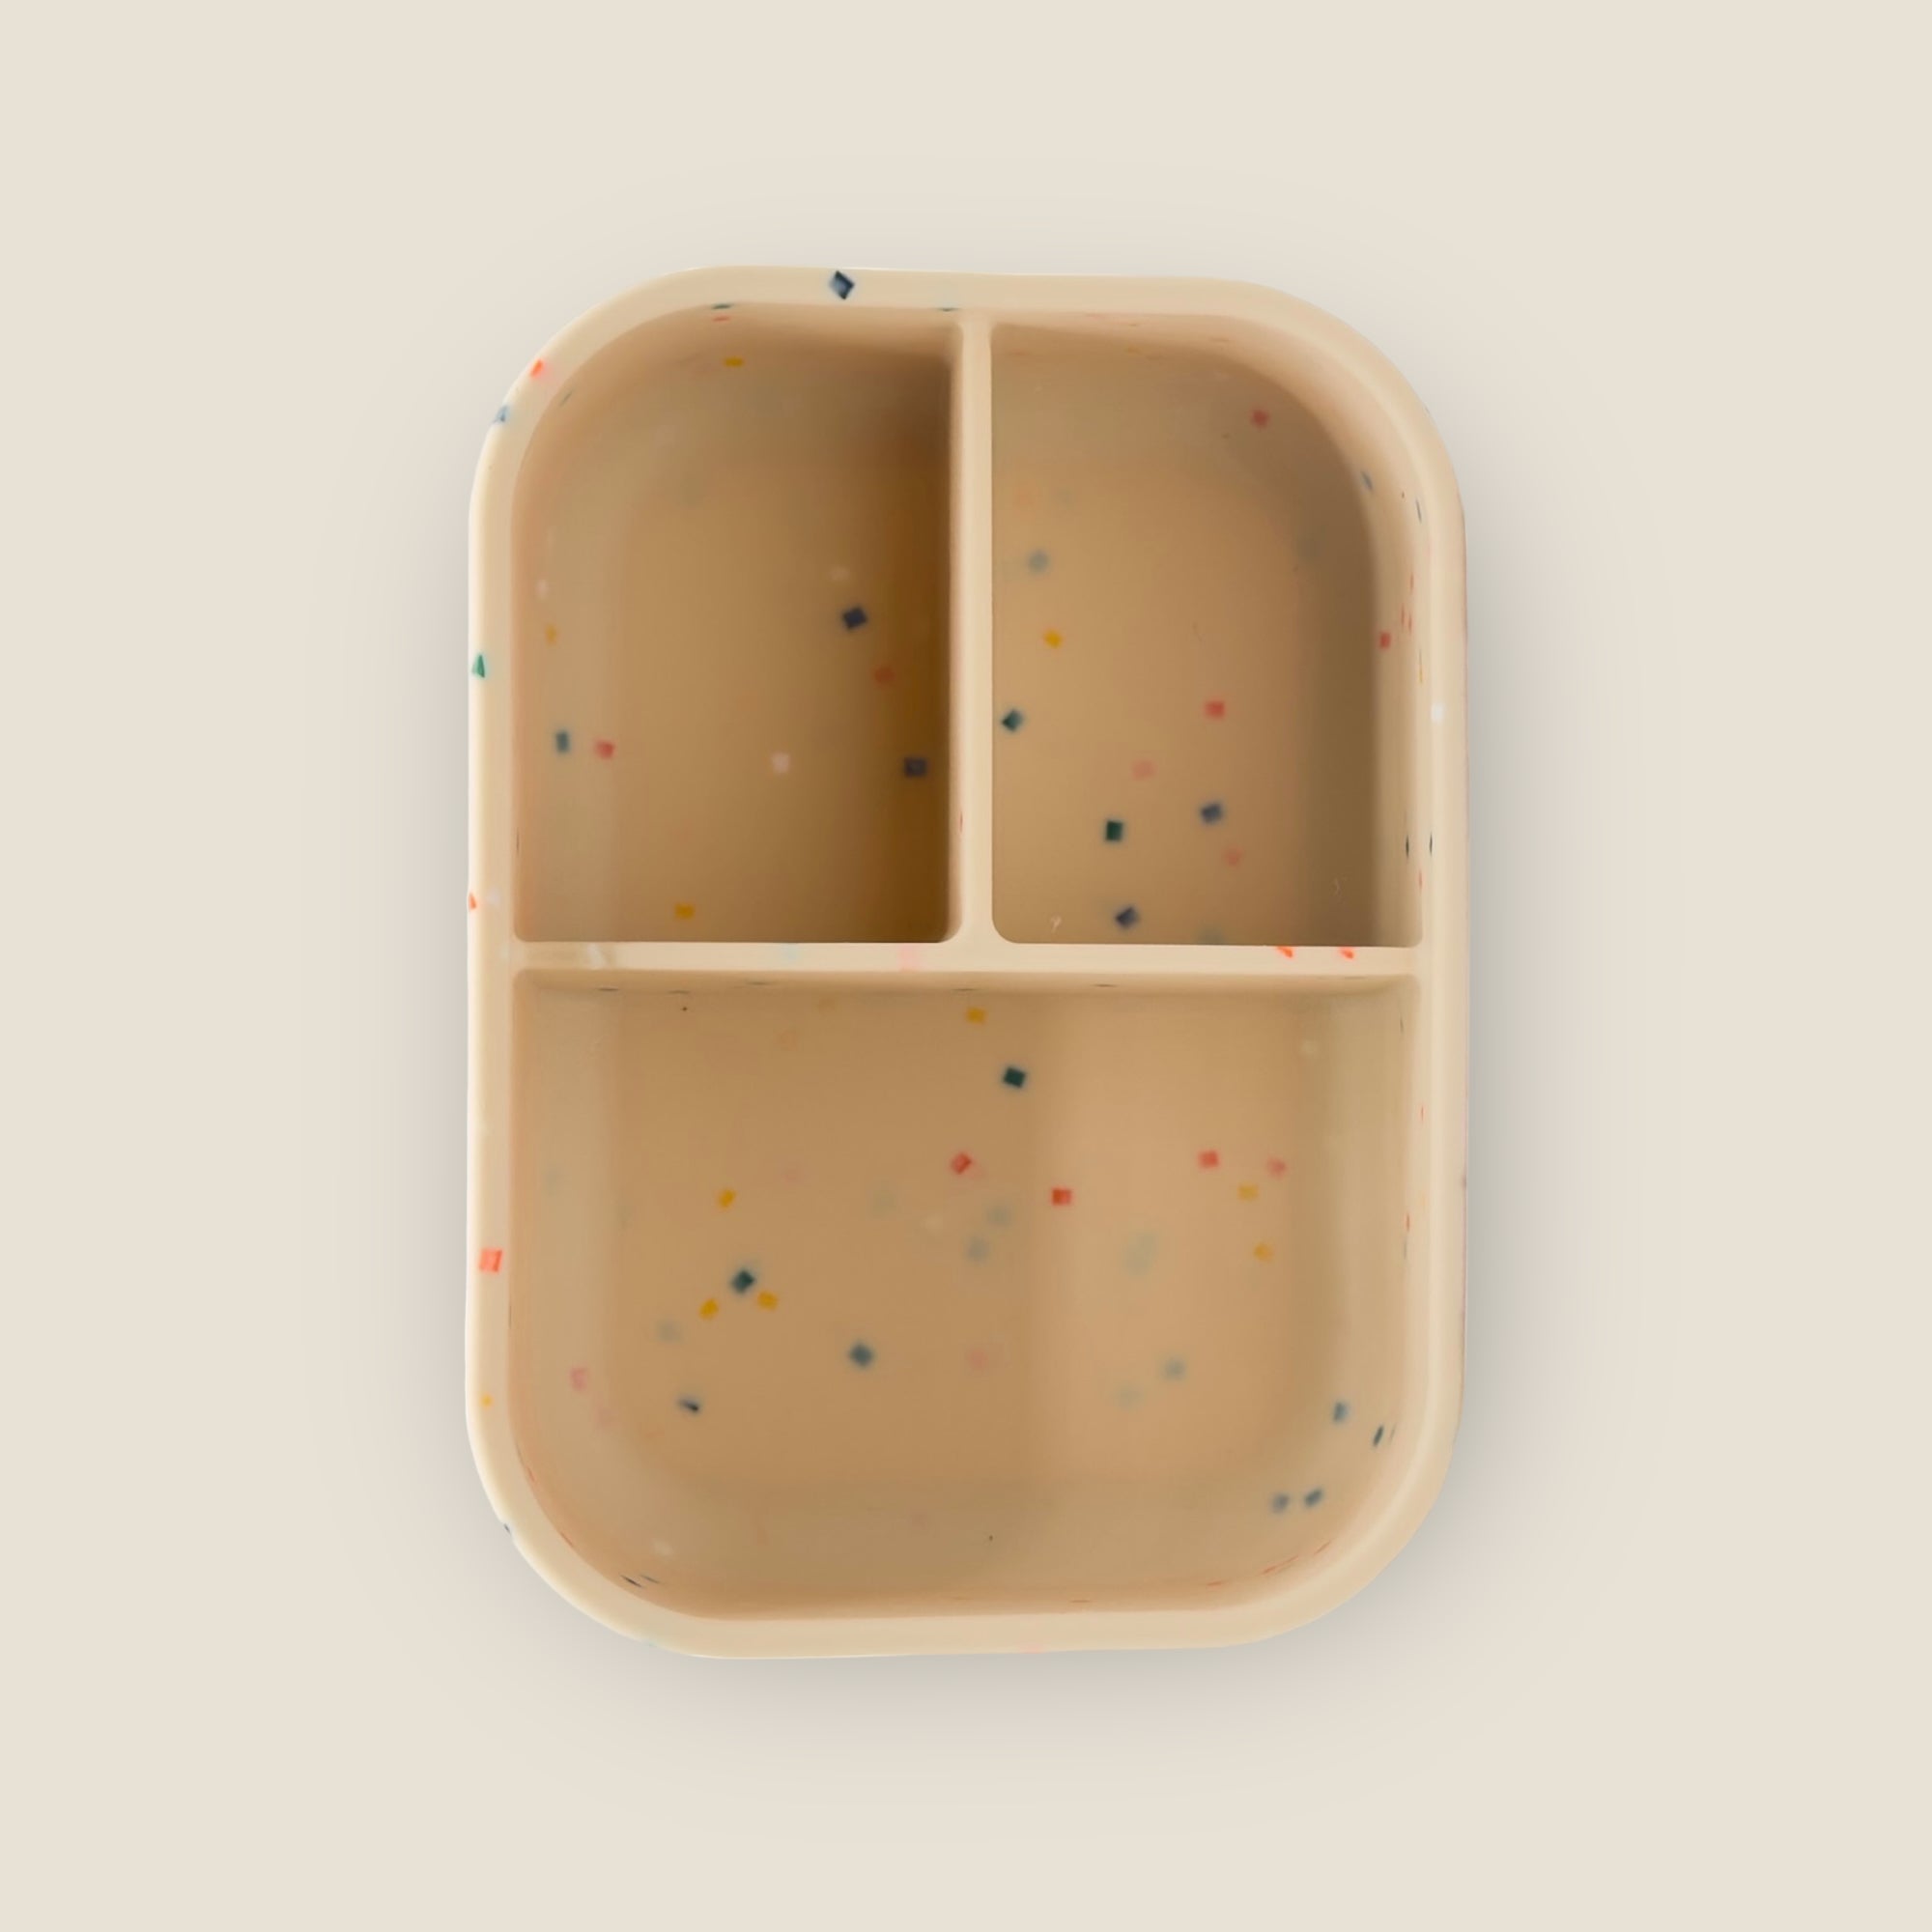 Bento box - Speckled Ivory